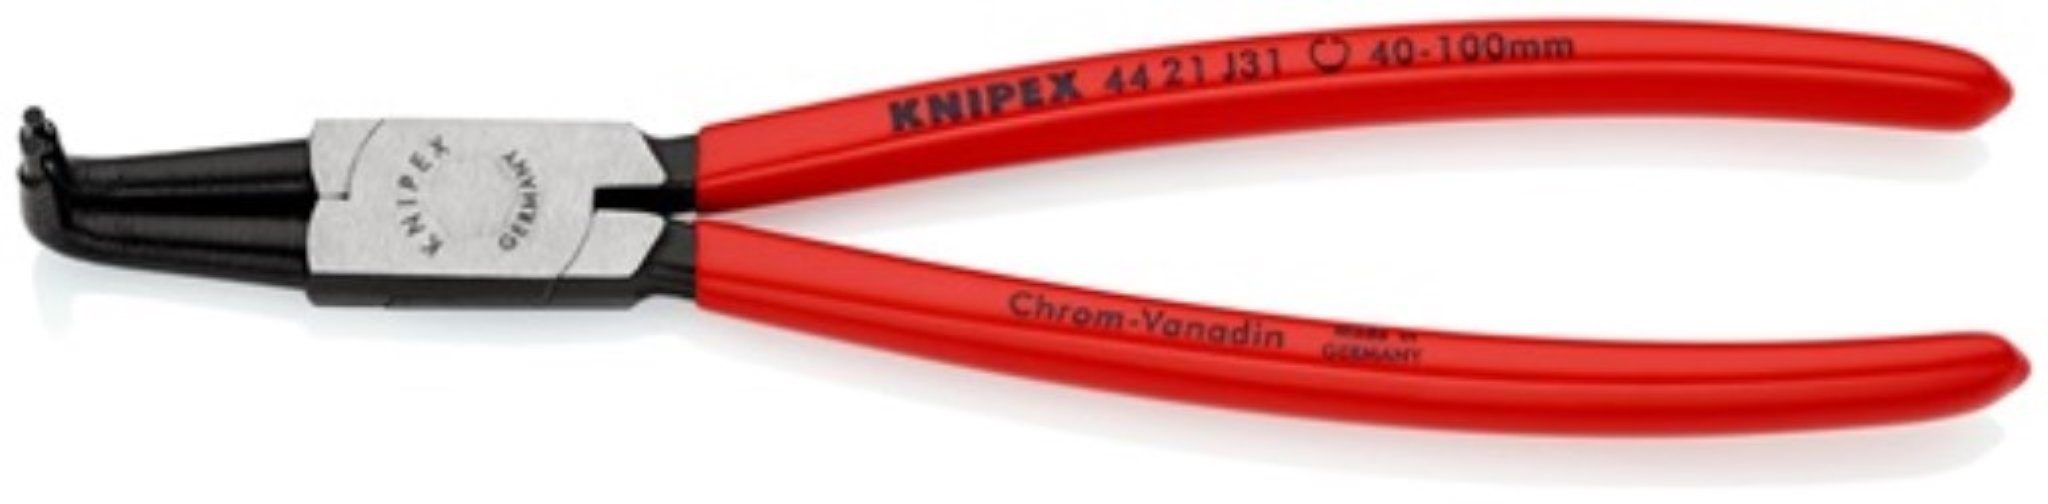 Knipex Sicherungsring Sicherungsringzange J 31 f.Bohrungen D.40-100mm pol.KNIPEX für Innenr